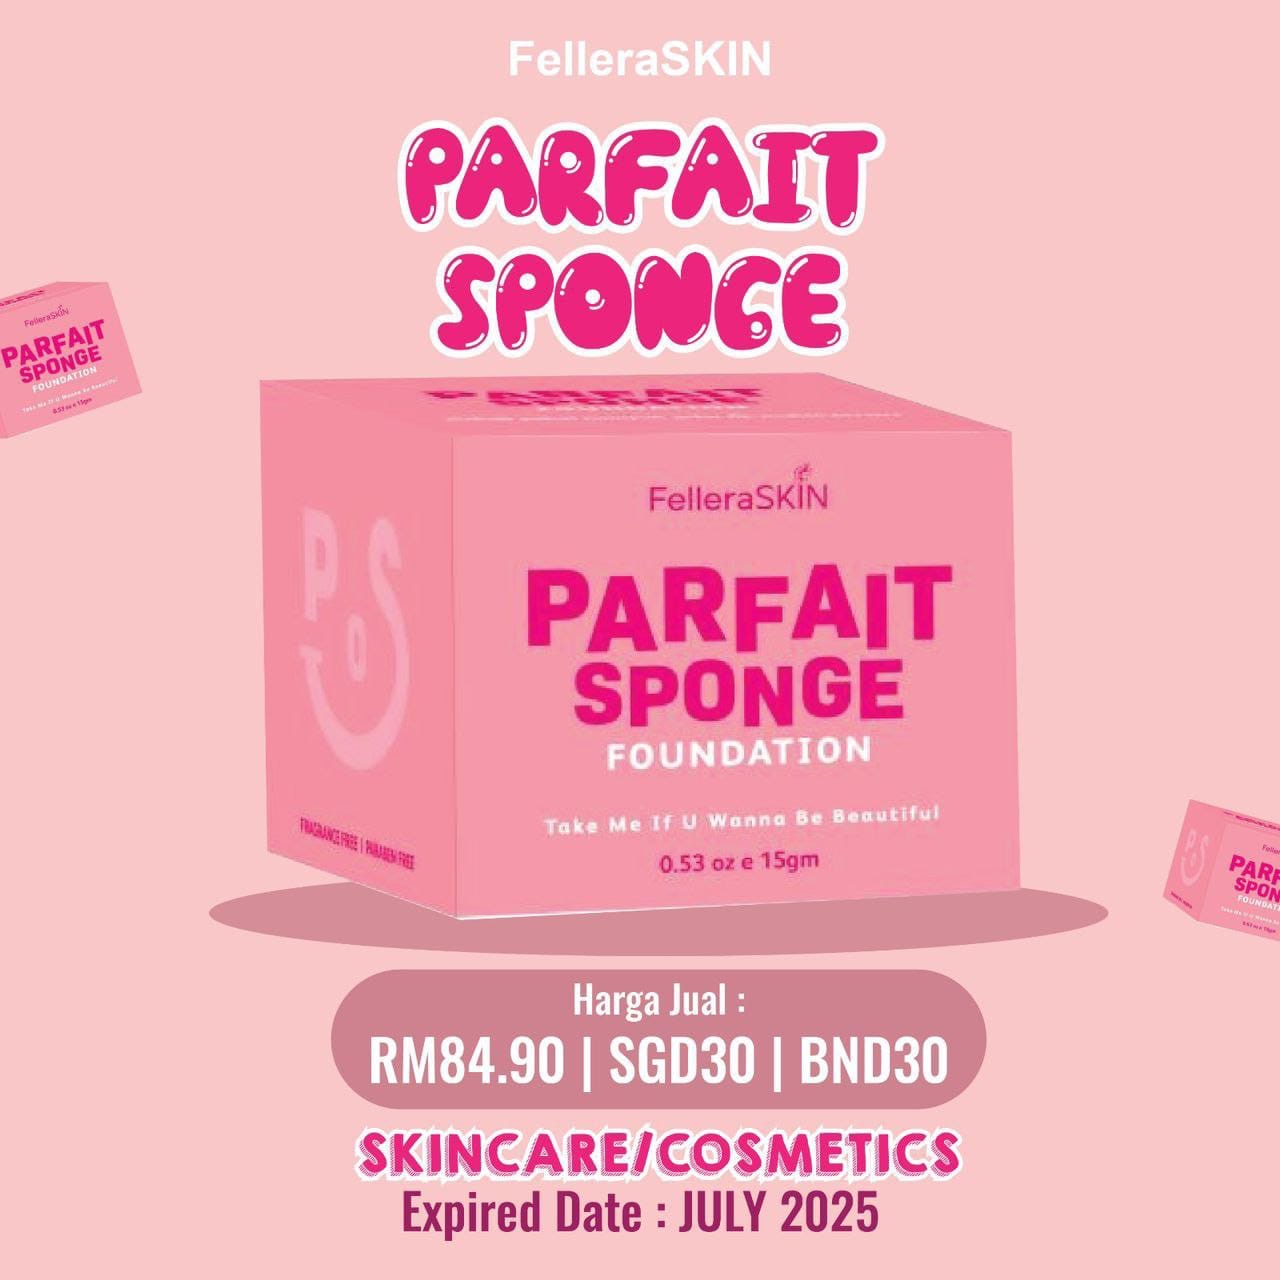 FelleraSKIN Parfait Sponge Foundation